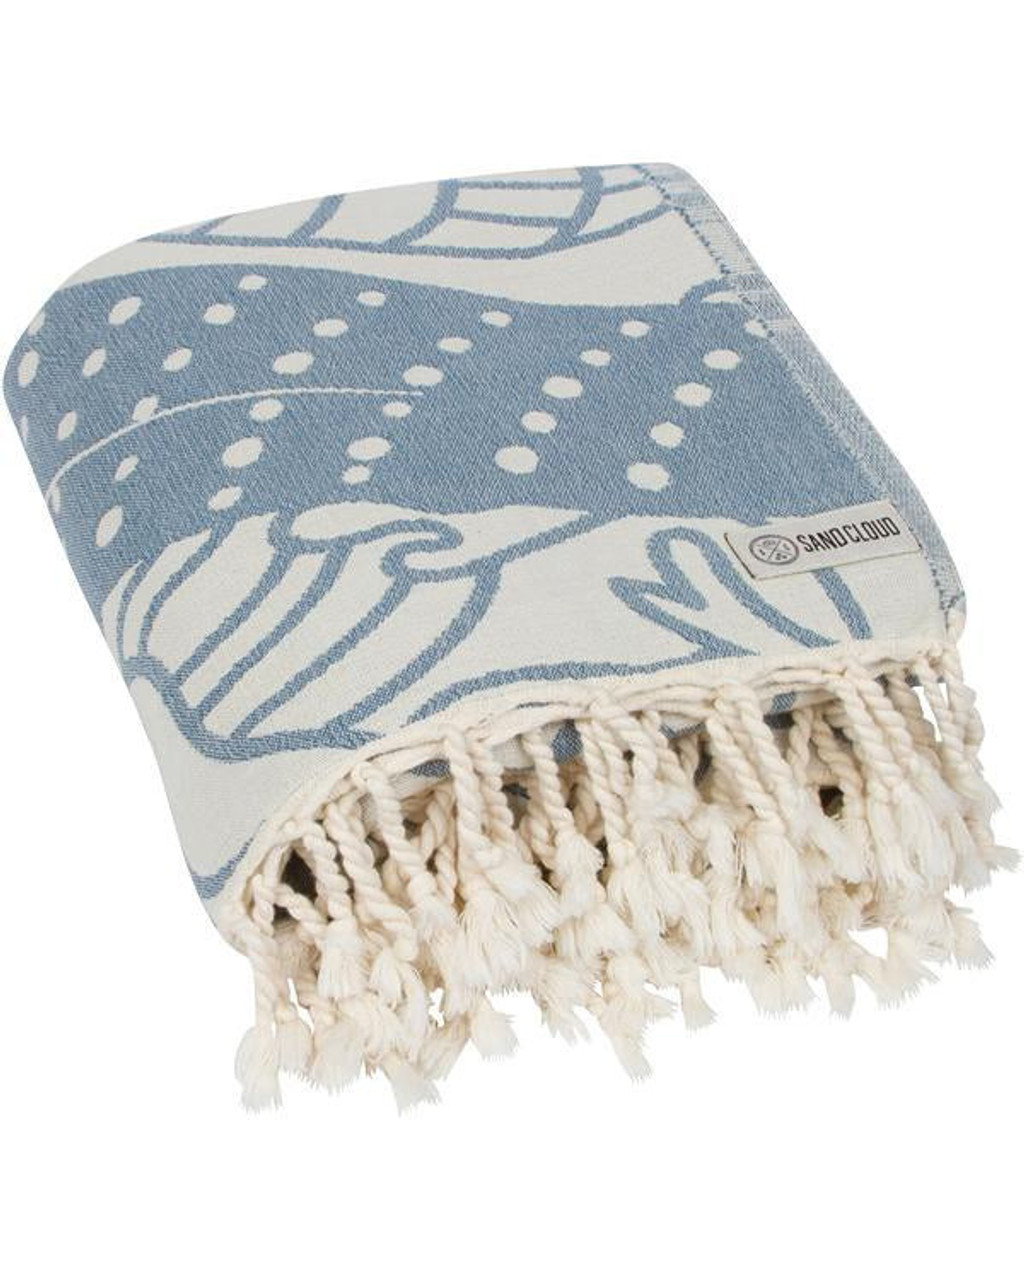 Sand Cloud 100% Turkish Organic Cotton XL Towel - Blue Whale Shark - 62x76